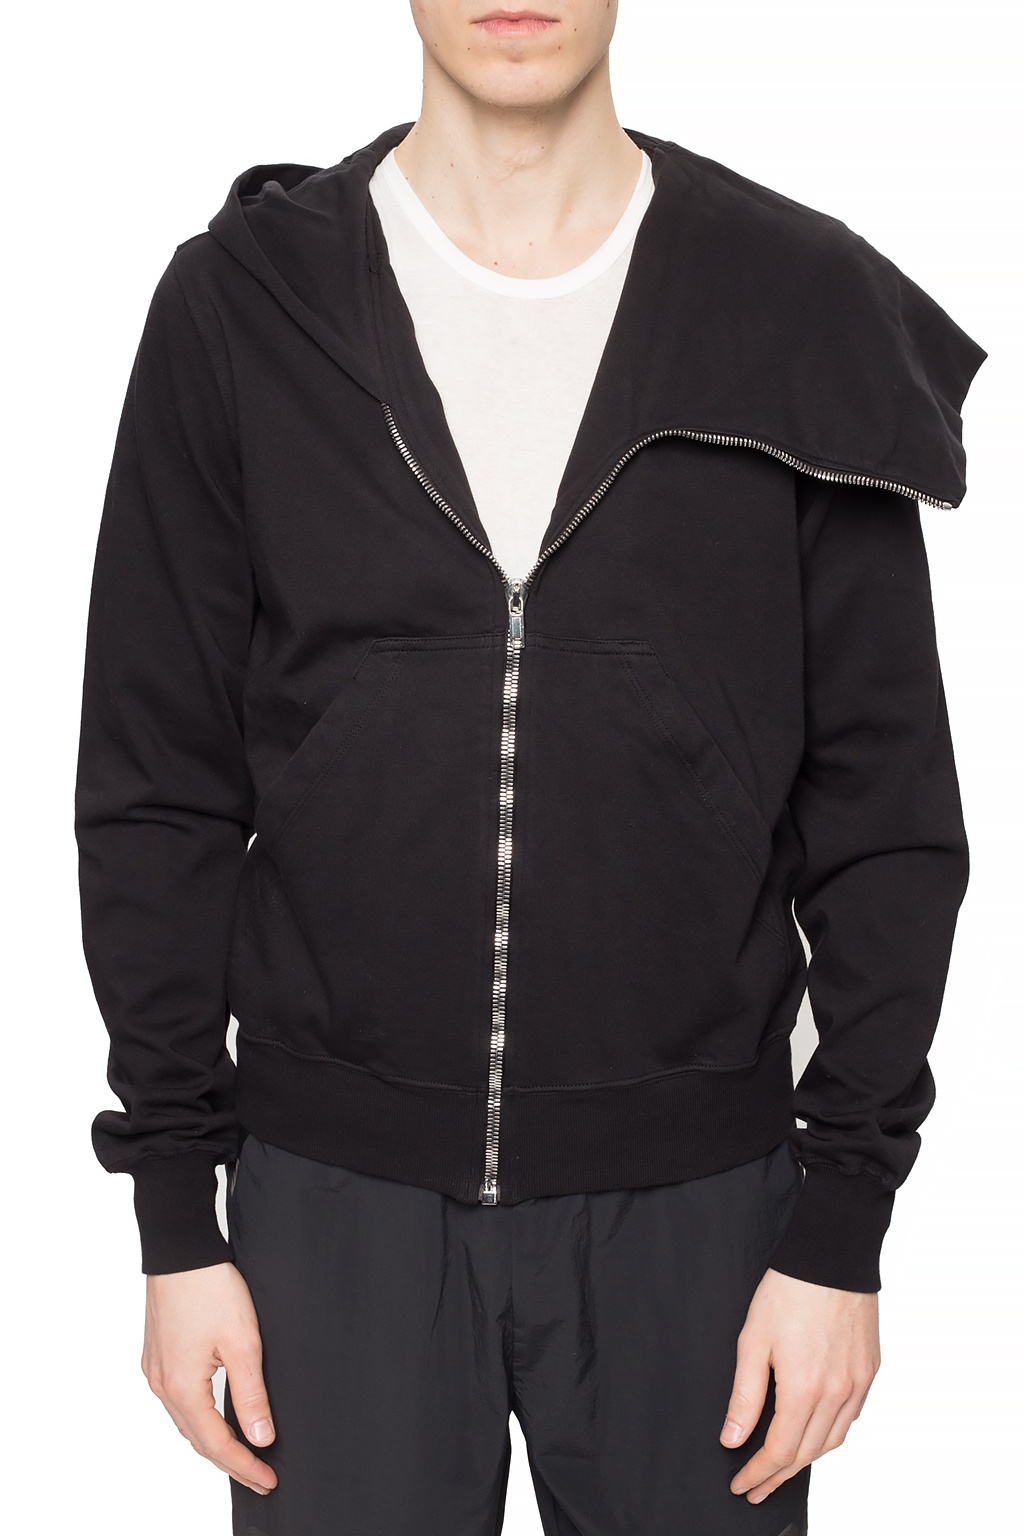 Nike Therma Repel Park Jacket Sweatshirt with asymmetrical zip